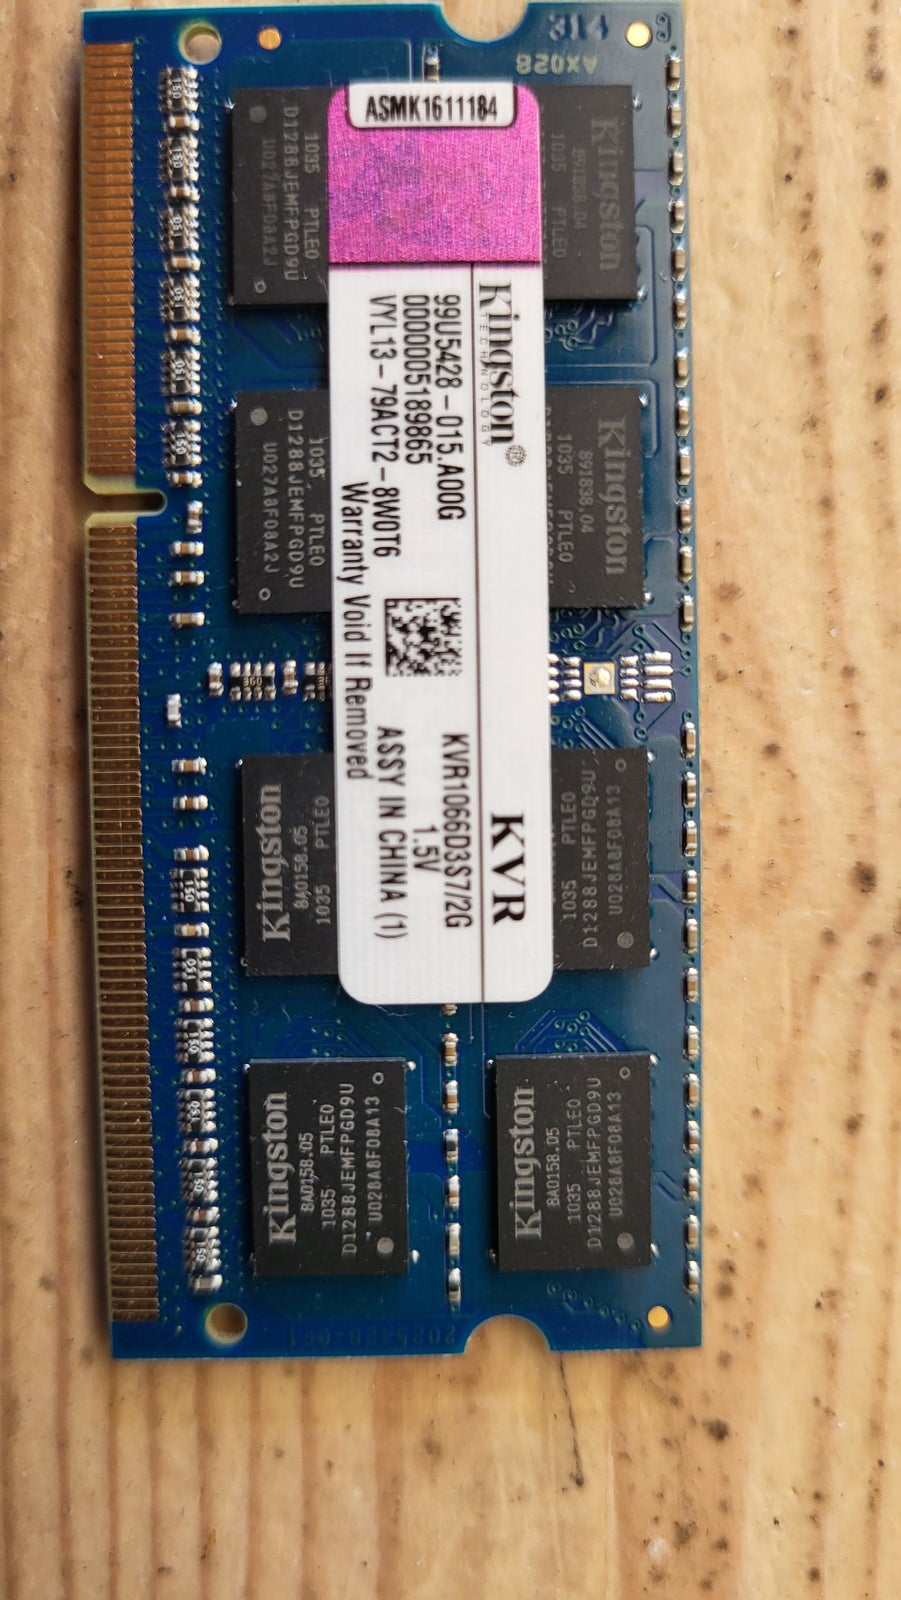 Kingston, 2x2GB, DDR3 SDRAM